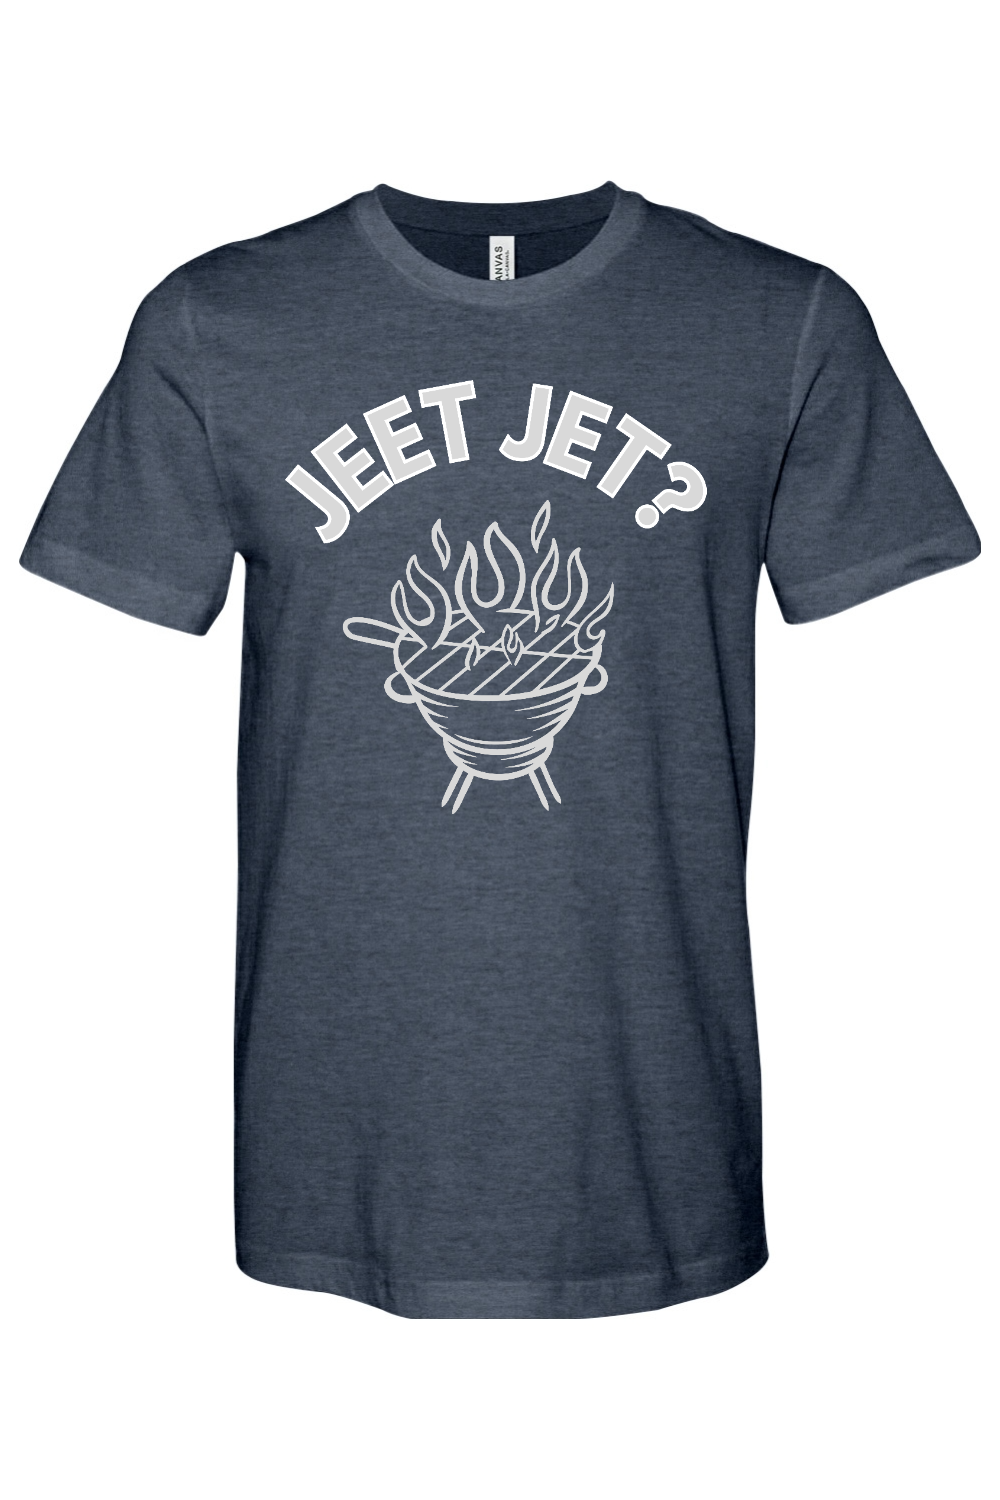 Jeet Jet?  - Bella + Canvas Heathered Jersey Tee - Yinzylvania